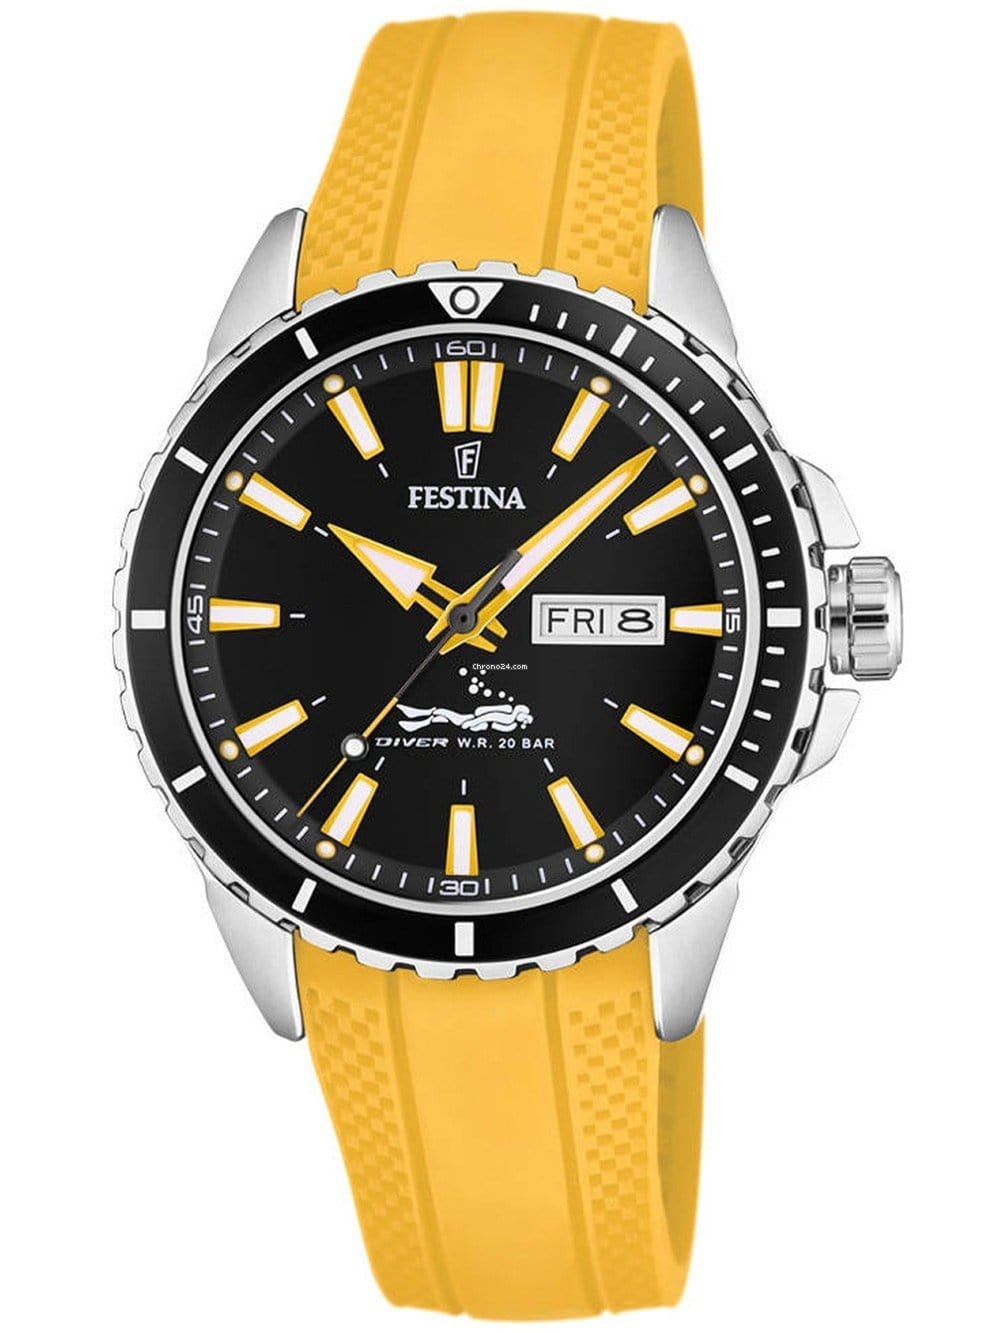 Festina Watch Festina Diver Yellow Watch Brand